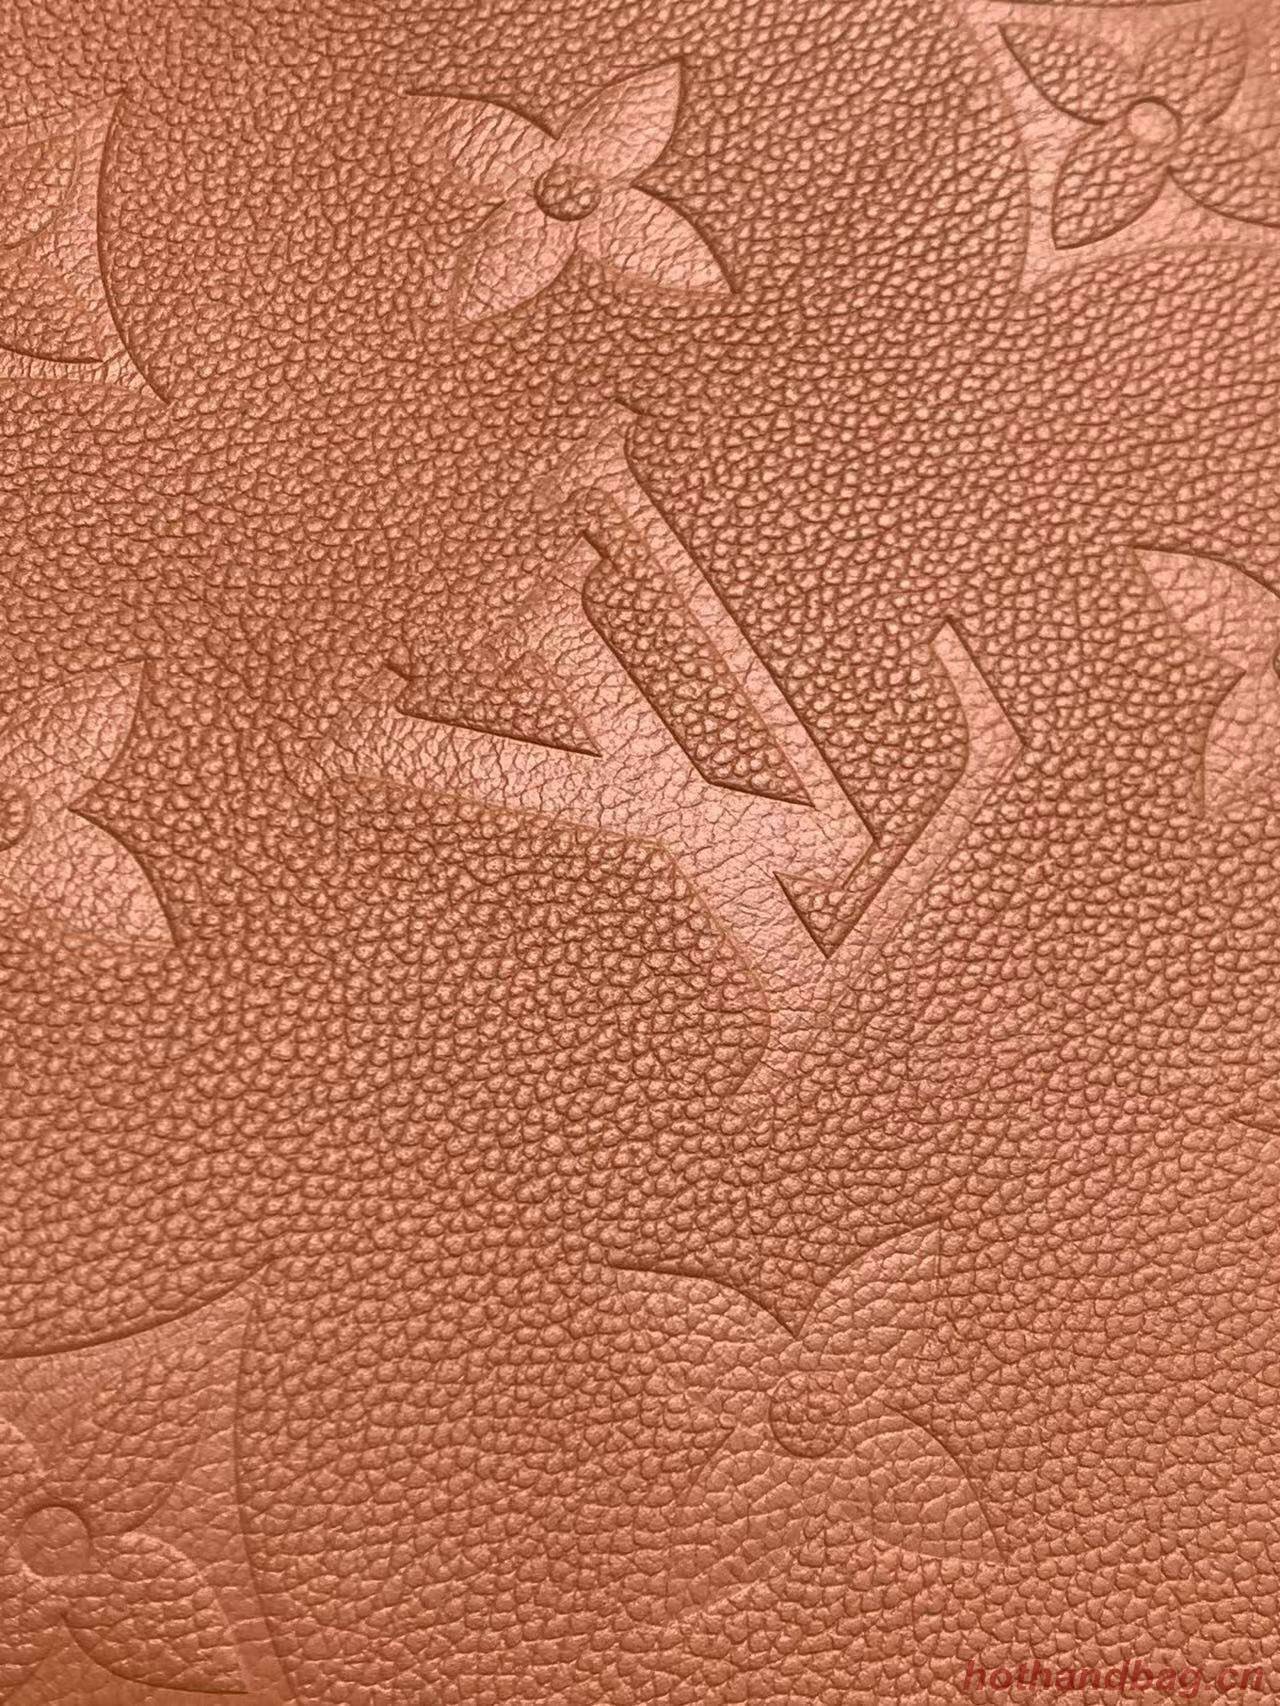 Louis Vuitton NEVERFULL MM M45685 Brown